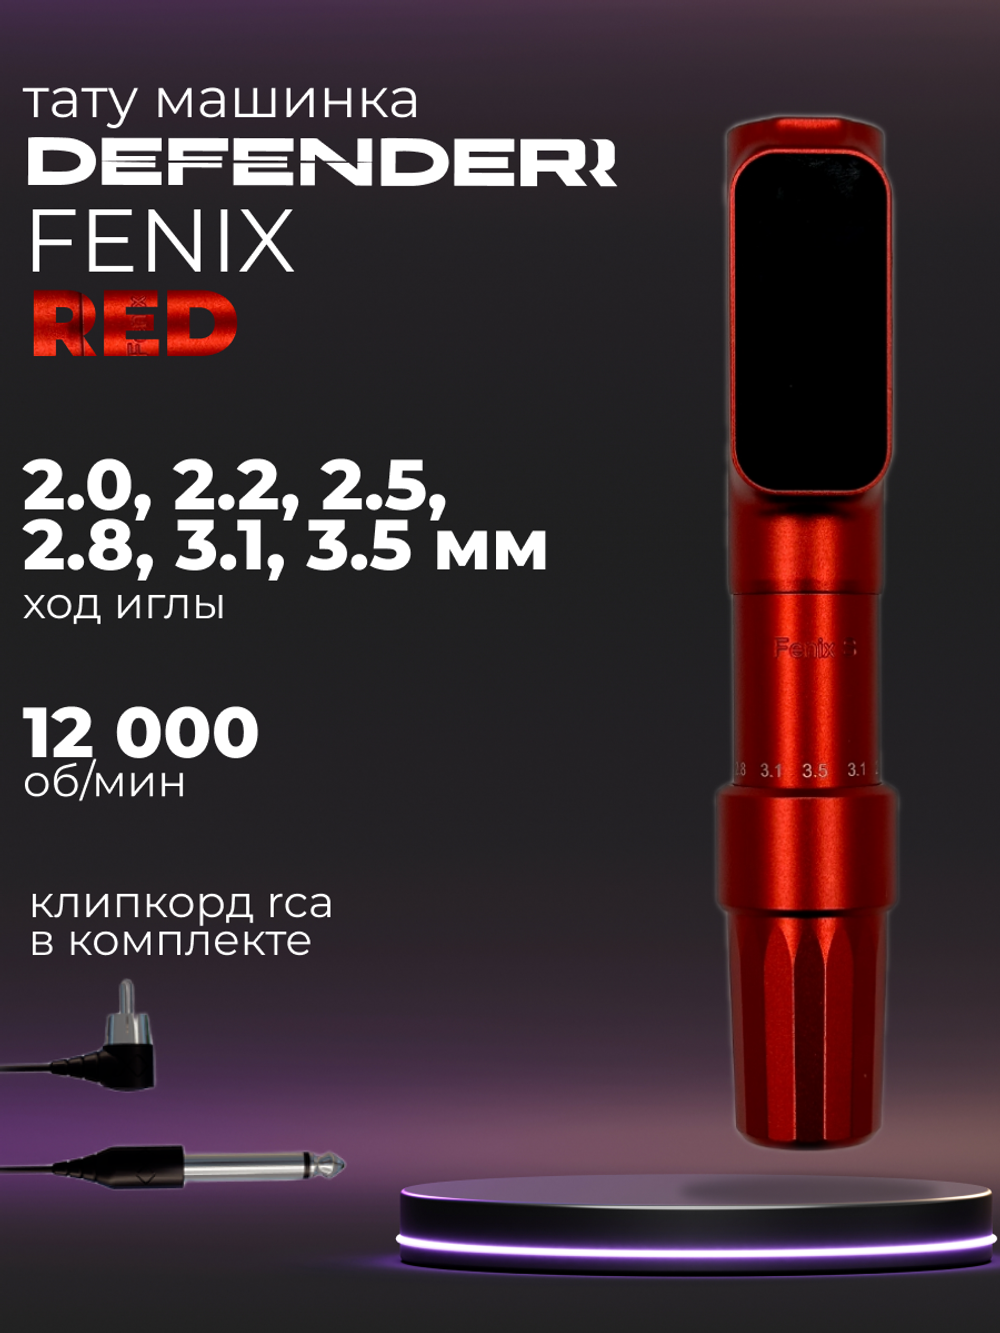 Defender Fenix S Red машинка для татуажа